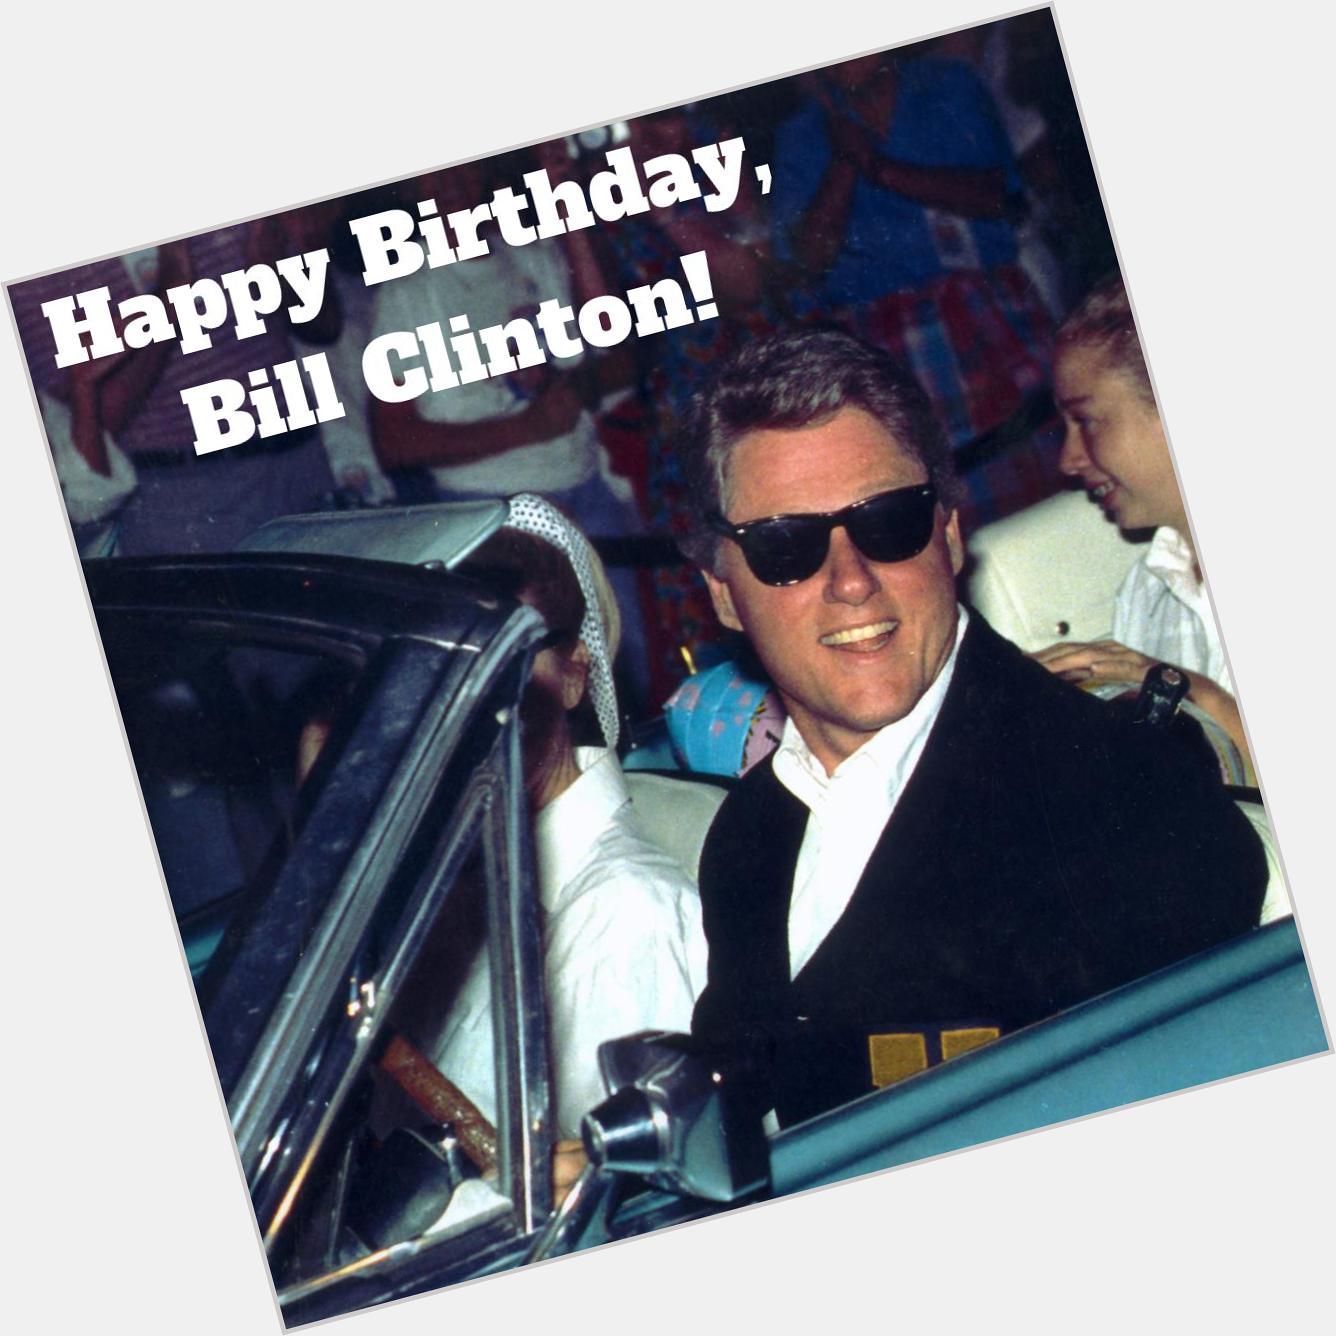 Happy birthday, Bill Clinton! He is celebrating his 73rd birthday today. 